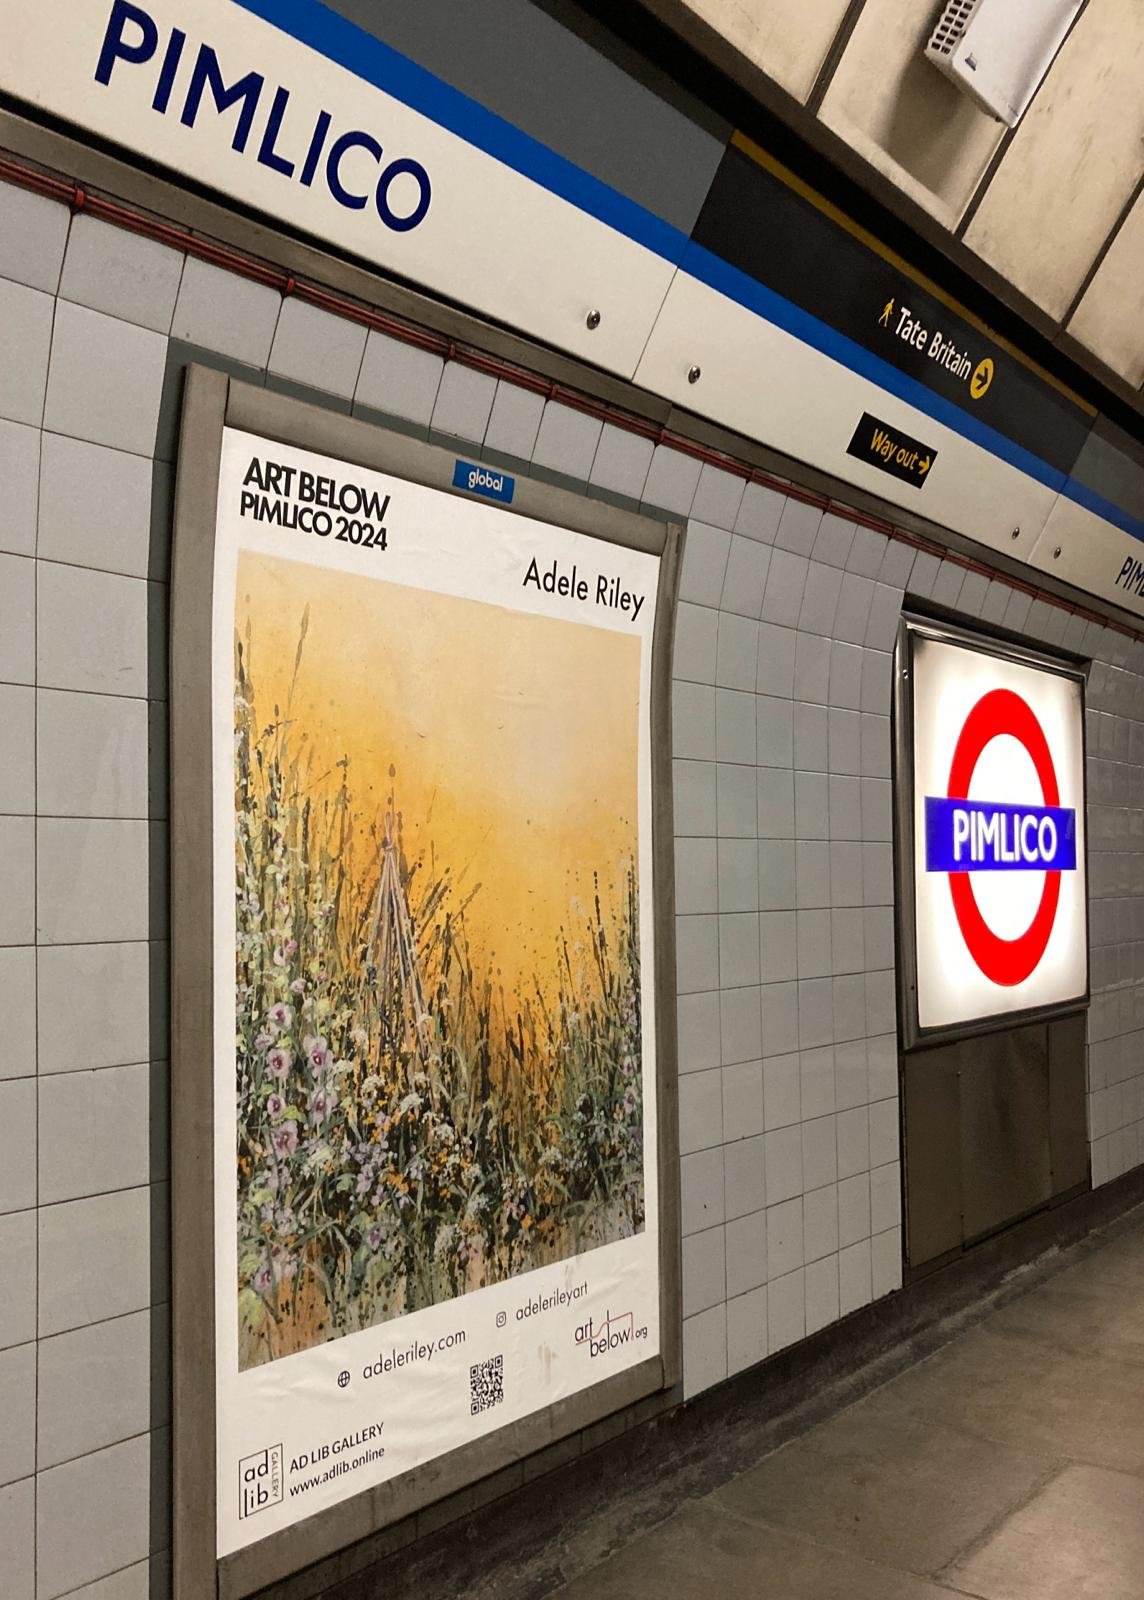 Art-Below-Ad-Lib-Gallery-Tube-Posters-Art-Underground-Adele-Riley.jpeg